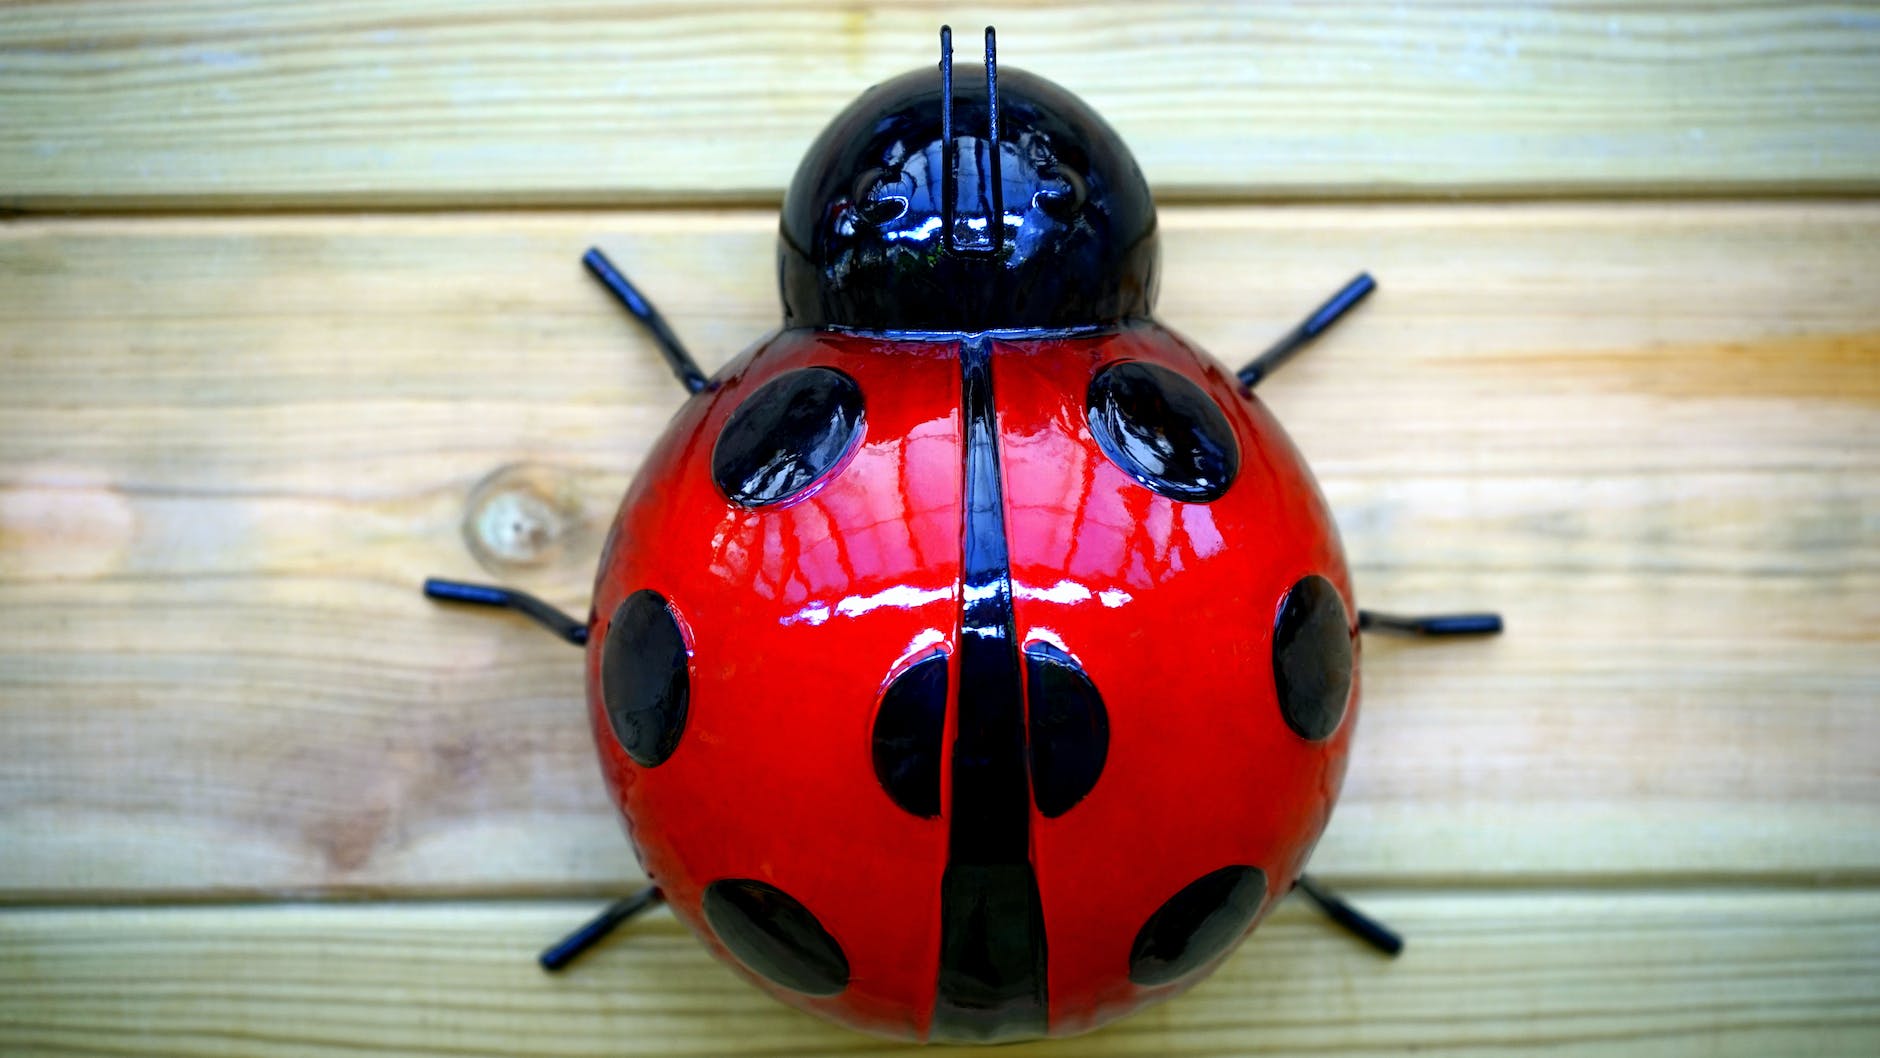 ladybug plastic toy